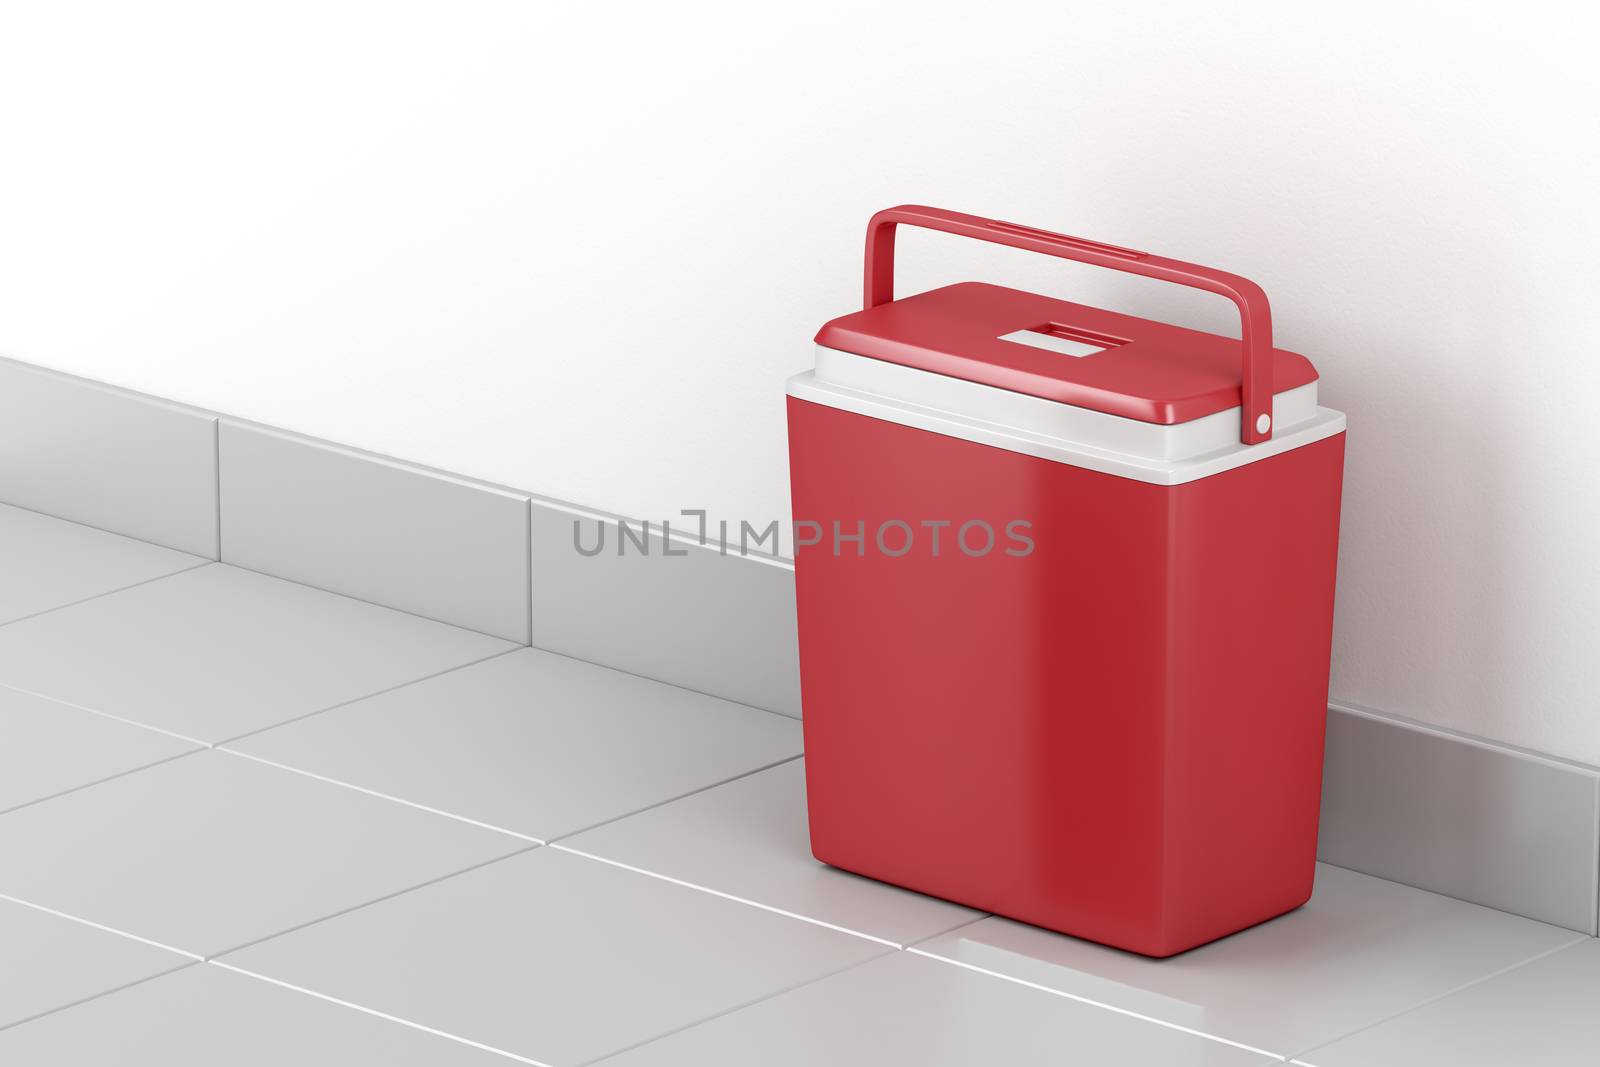 Handheld red refrigerator on the floor